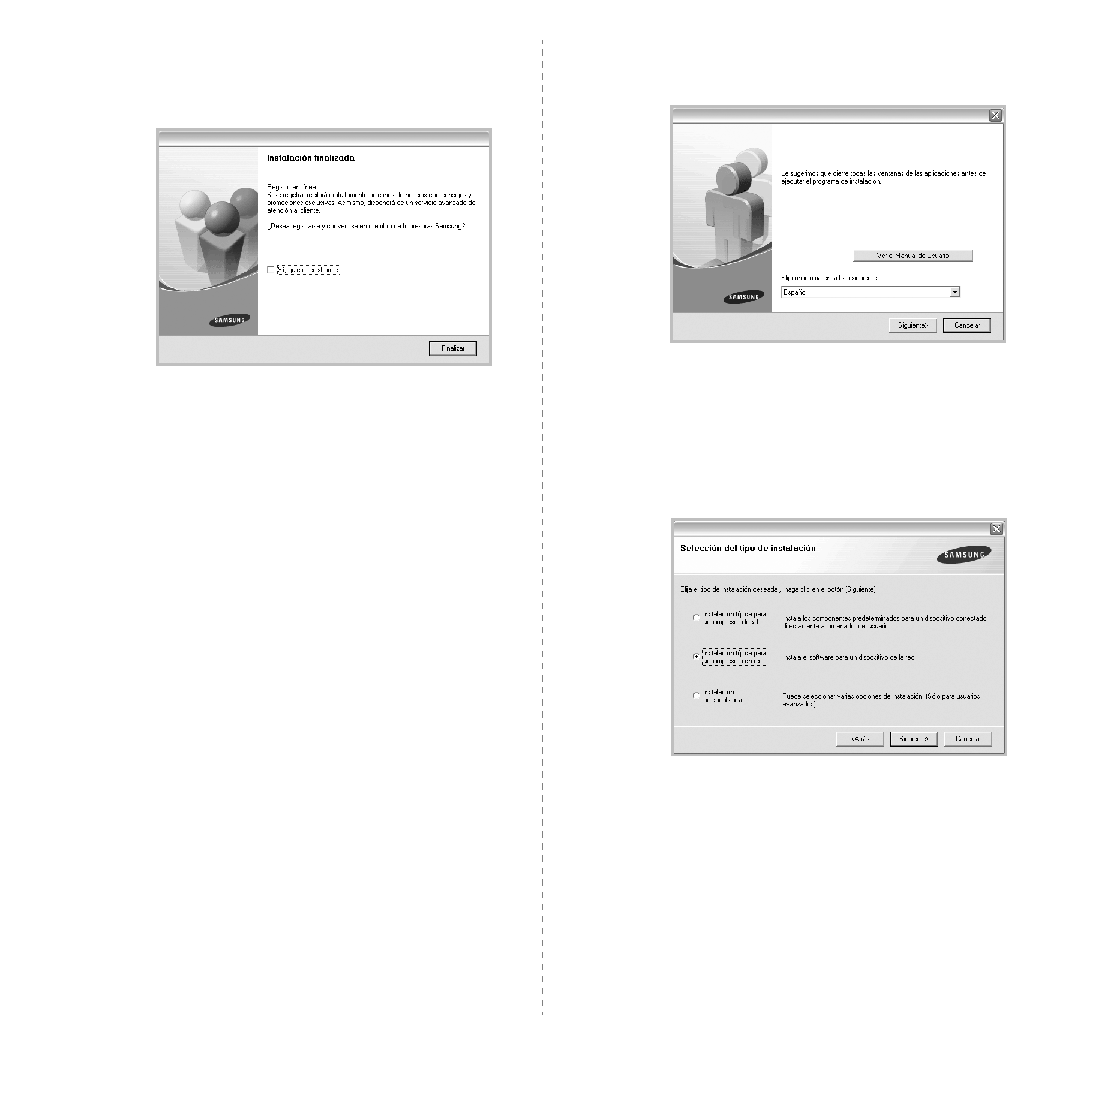 Samsung ML-3050 User Manual (ver.2.00)